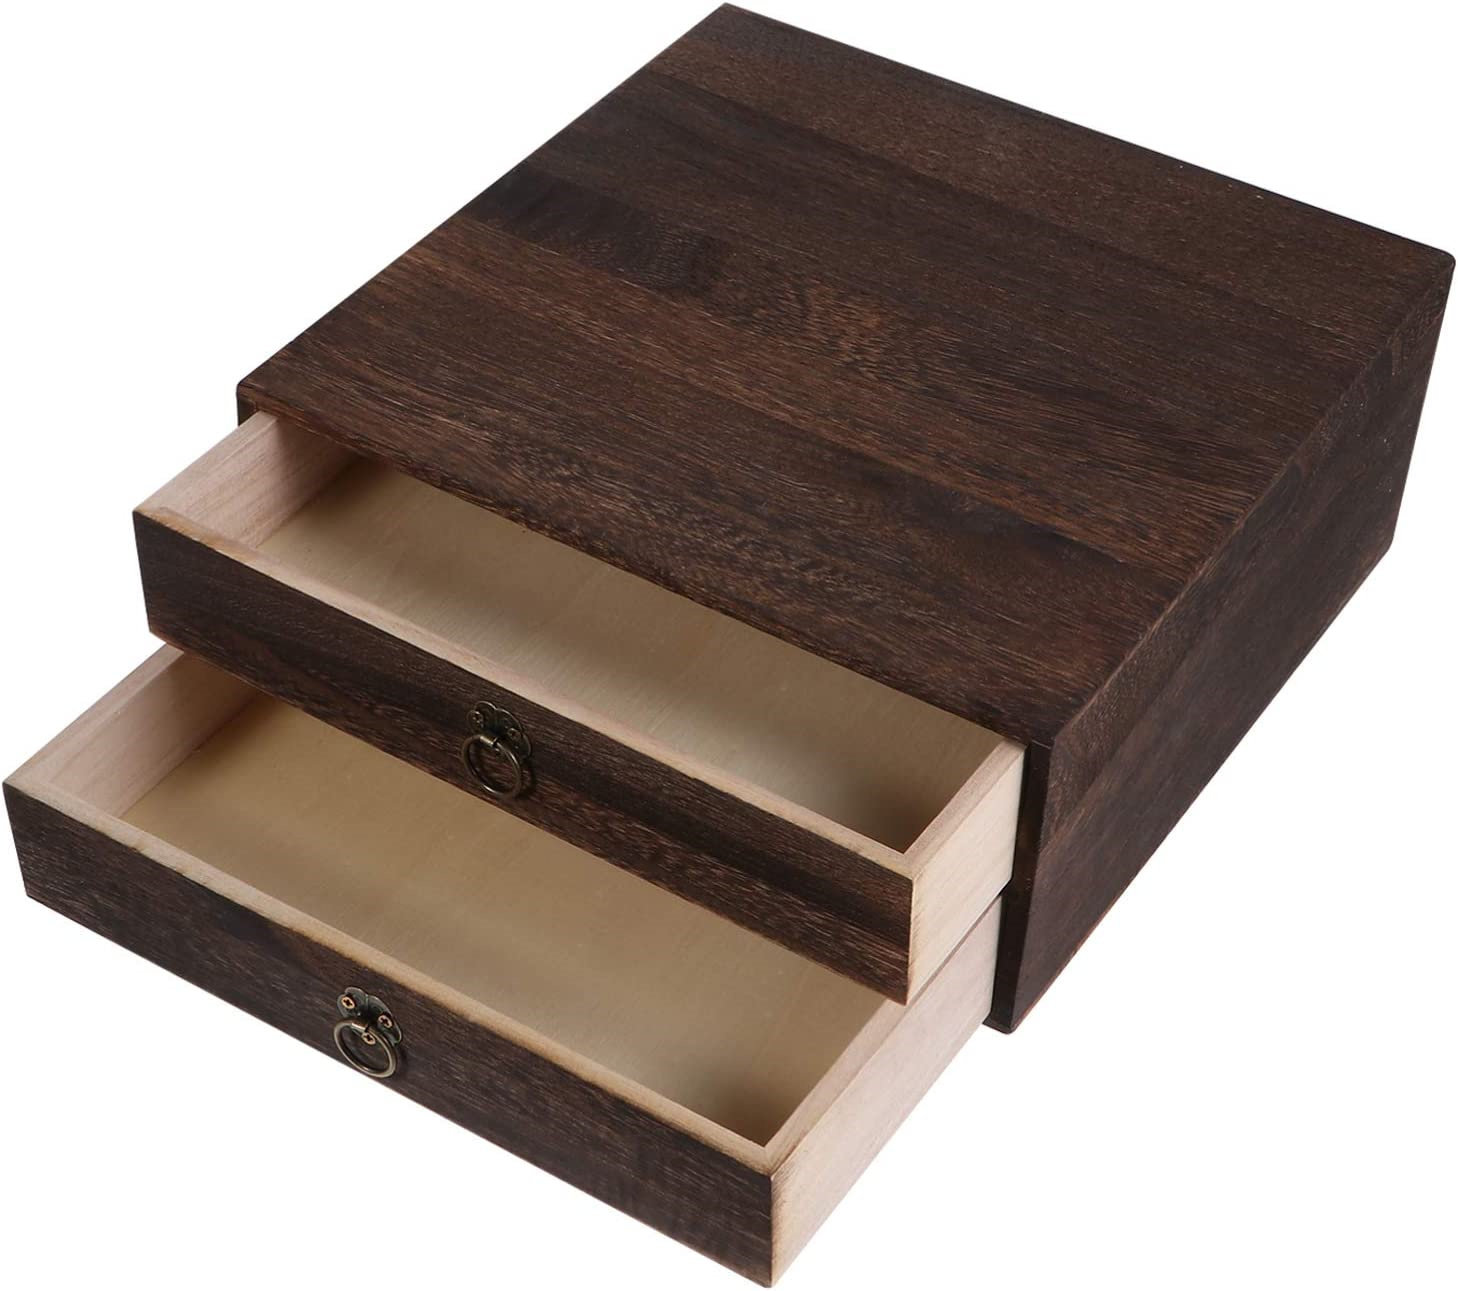 Stackable Wooden Desk Organizer Kit with 2 Drawers & 2 Trays - Bindertek